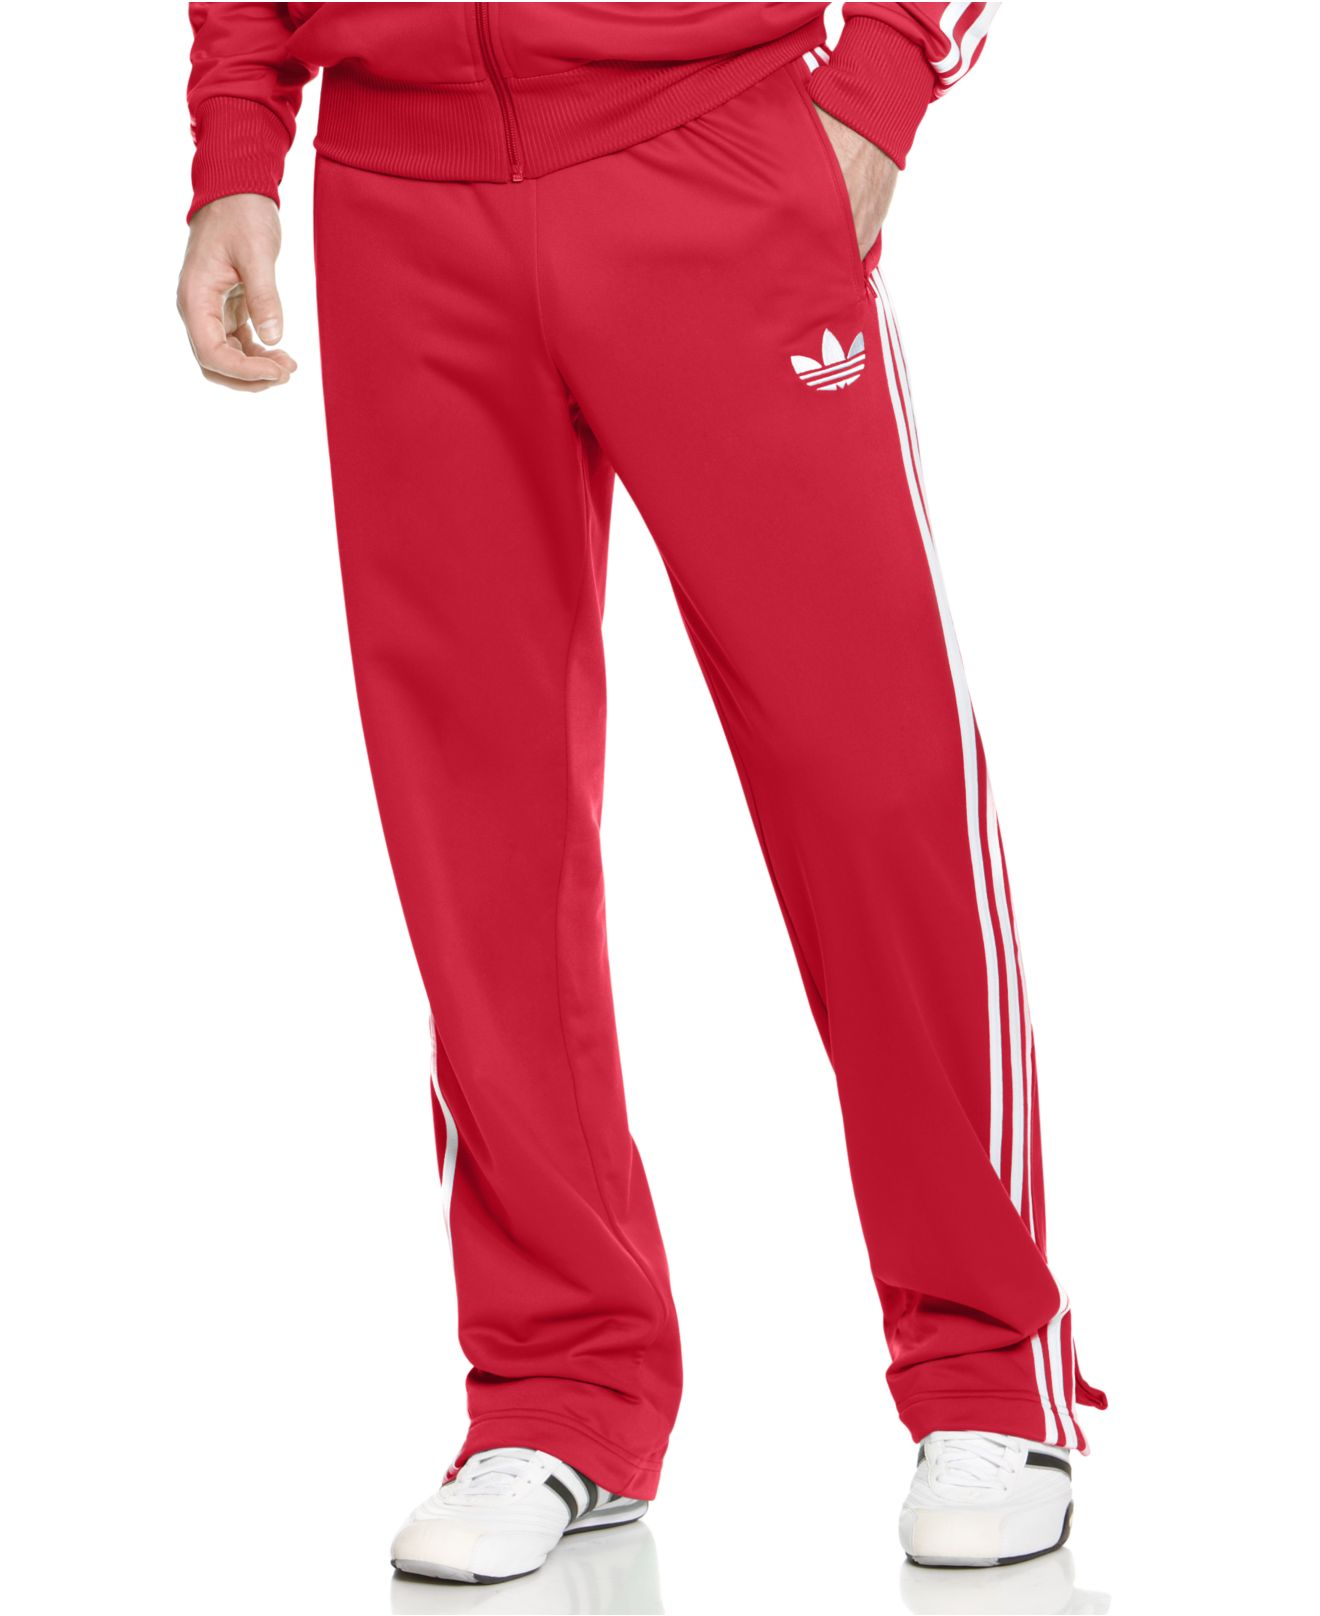 red adidas track pants mens